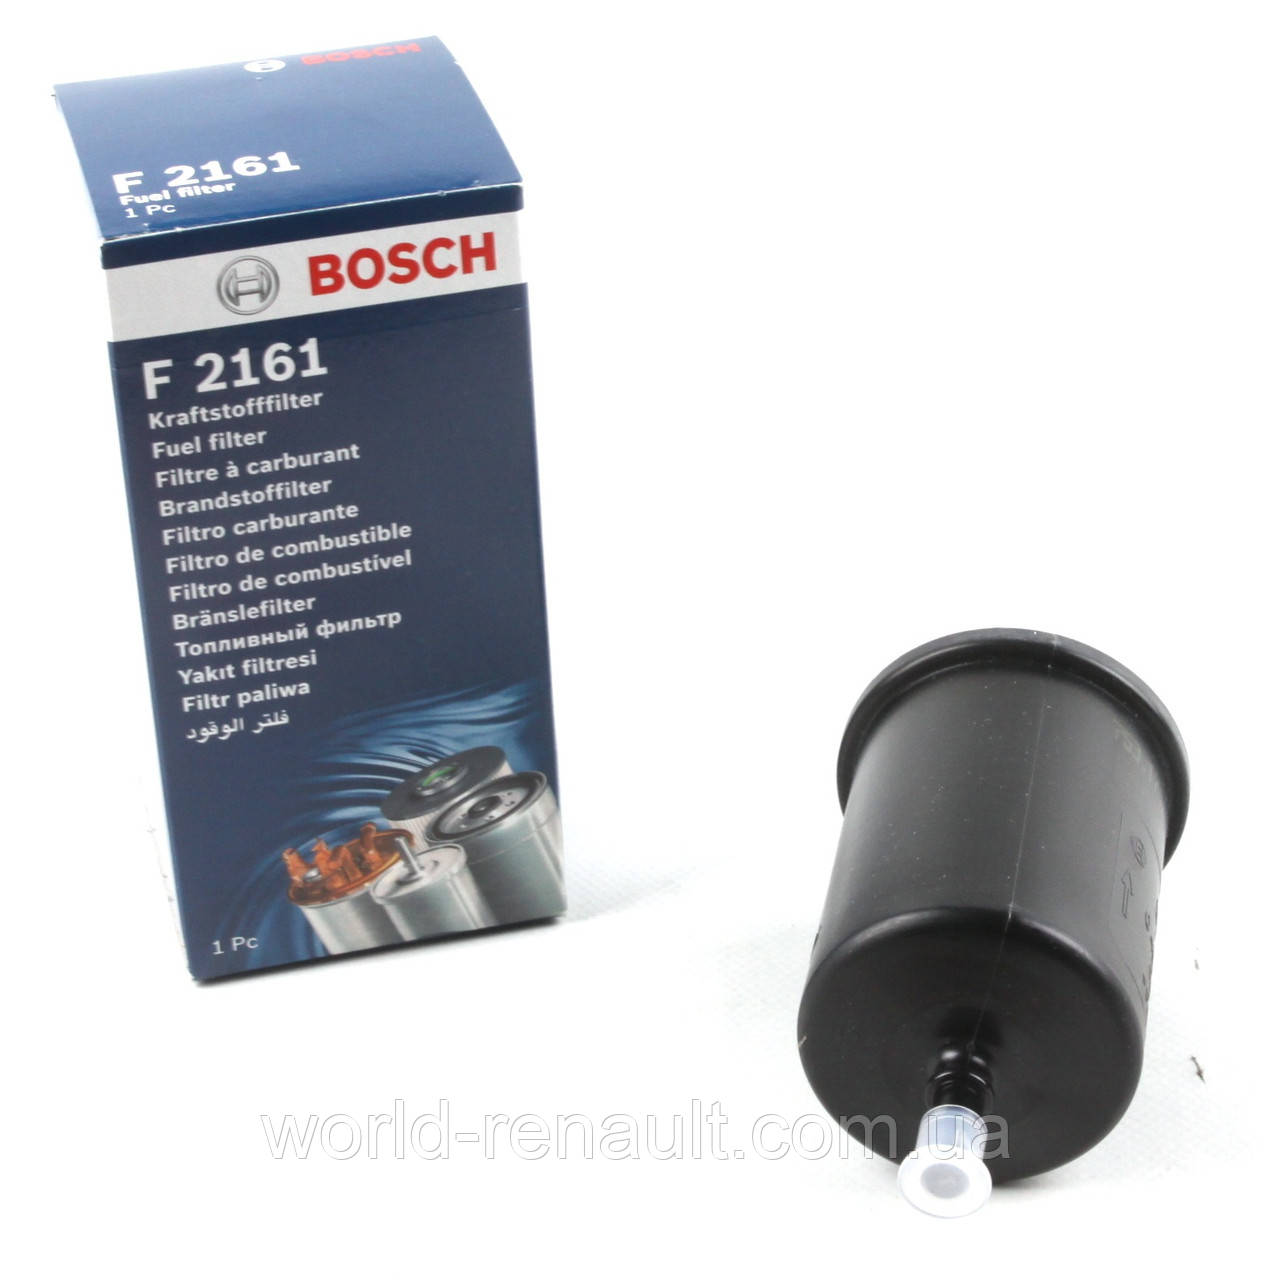 BOSCH (Германия) 0450902161 - Фильтр топливный на Renault Clio 3 (D4F 1.2i,  K4J 1.4i 16V, K4M 1.6i 16V), 269 ₴